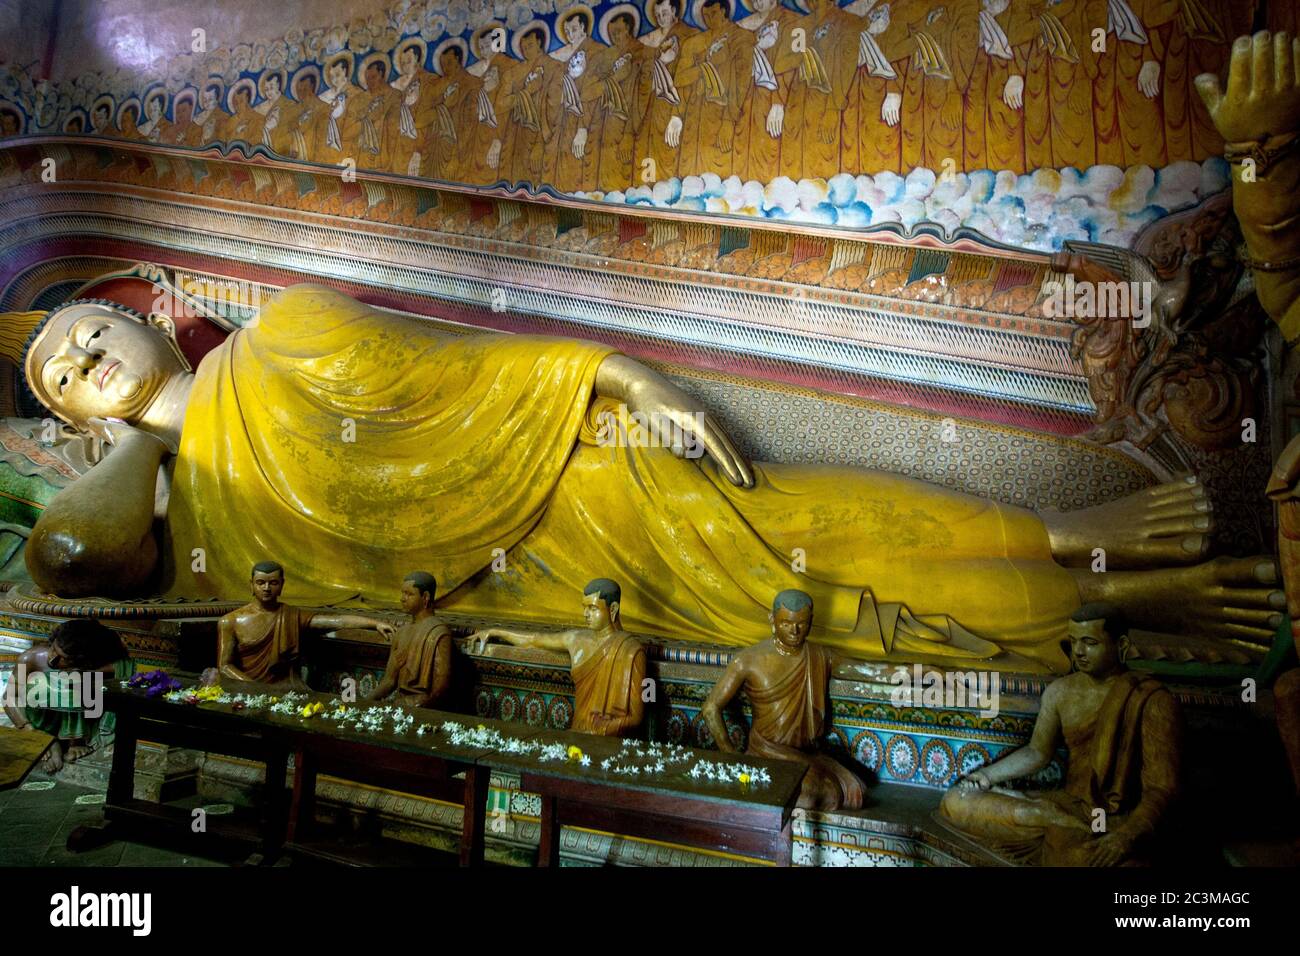 The reclining Buddha statue in the Shrine Room at Wewurukannala Vihara at Dickwella in Sri Lanka. Stock Photo